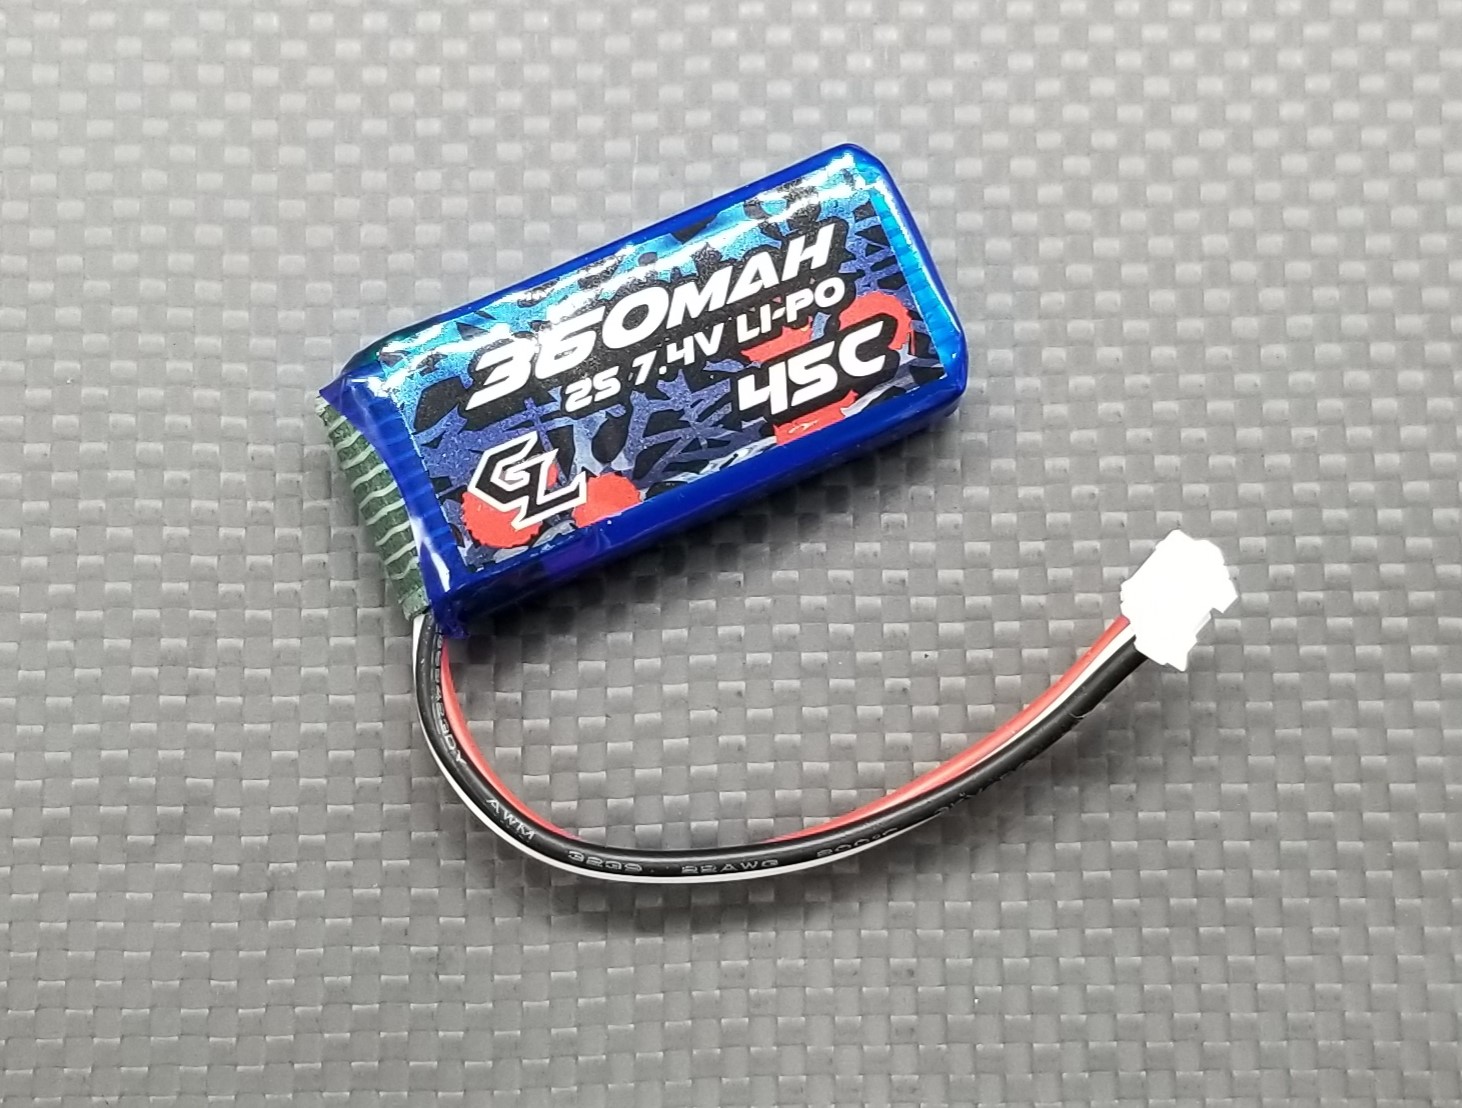 GL-Racing 360Mah 2S Lipo Battery with JST plug